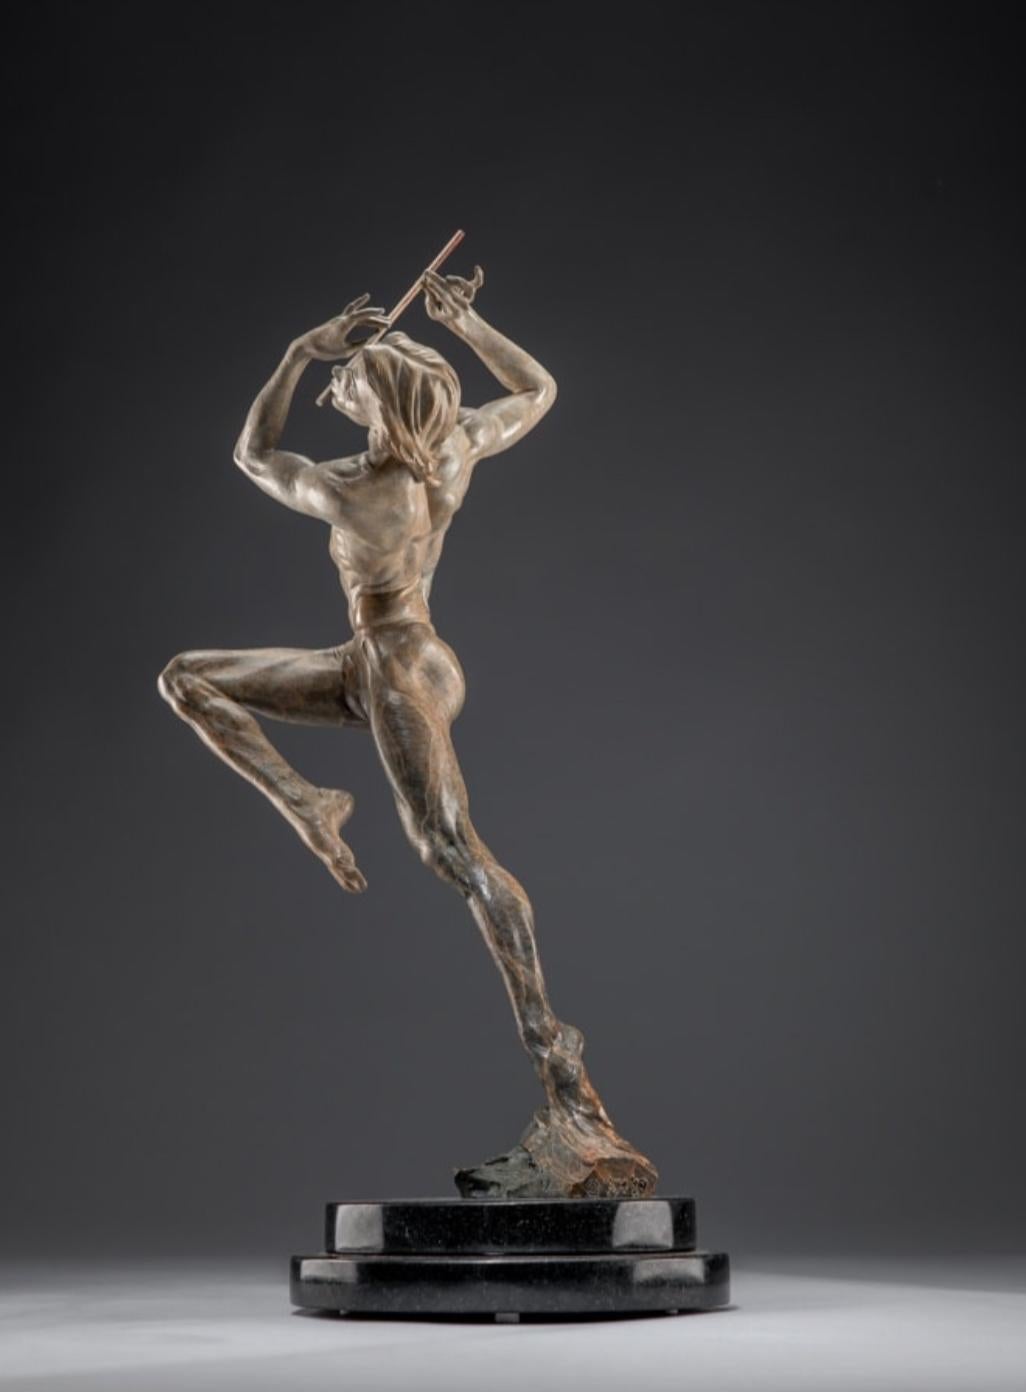 The Flutist, Atelier - Contemporary Sculpture by Richard MacDonald